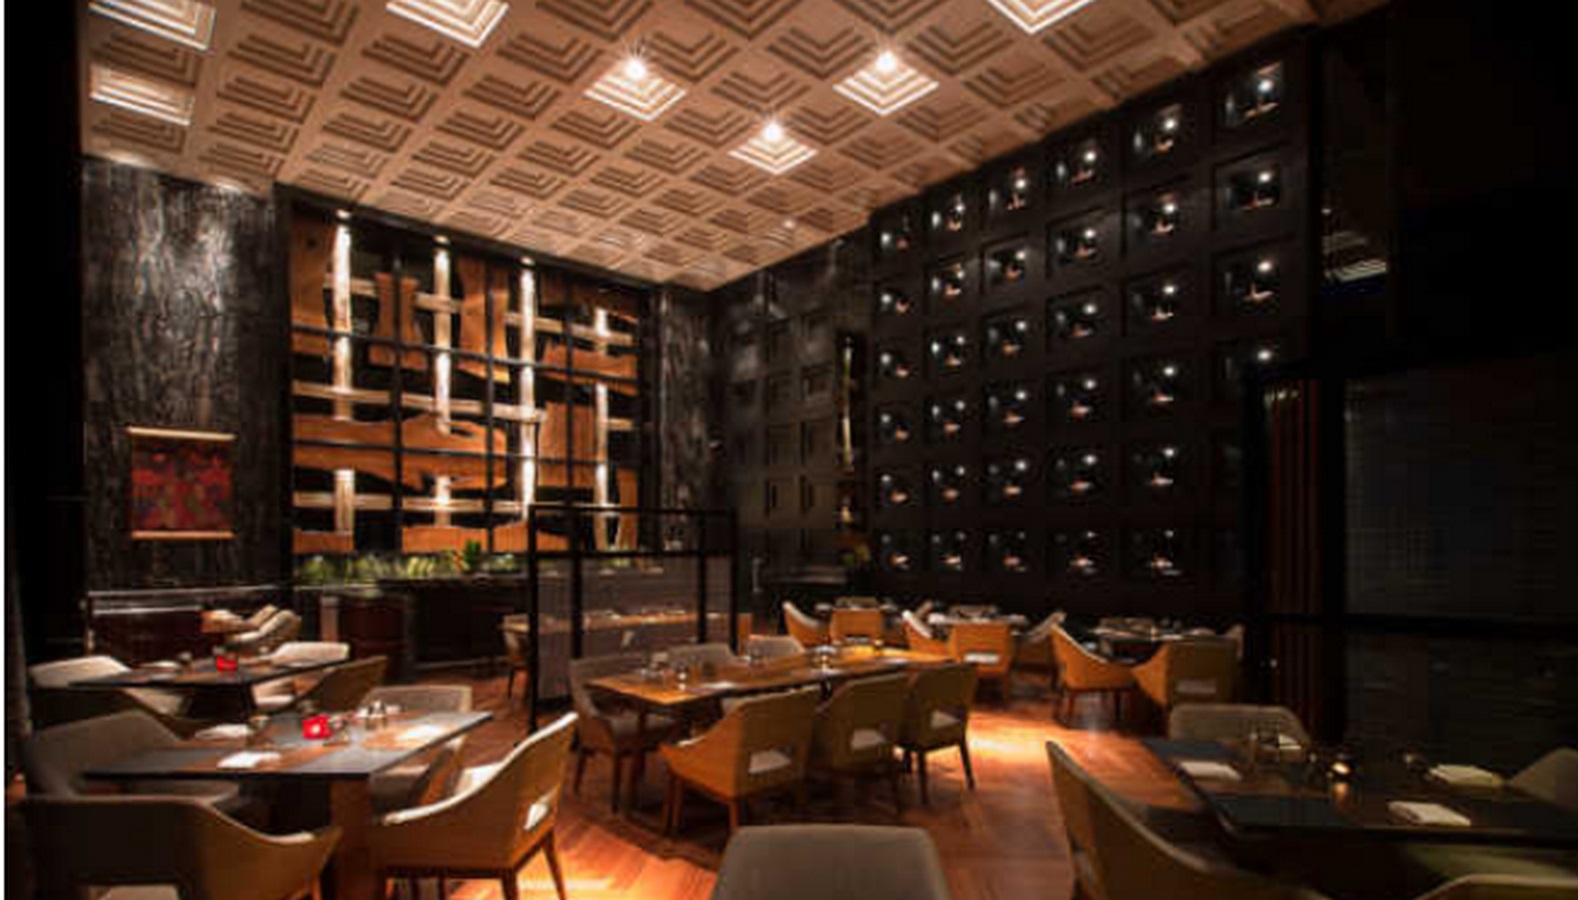 A2713 The Psychology Of Restaurant Interior Design Defining Luxury Image 1 